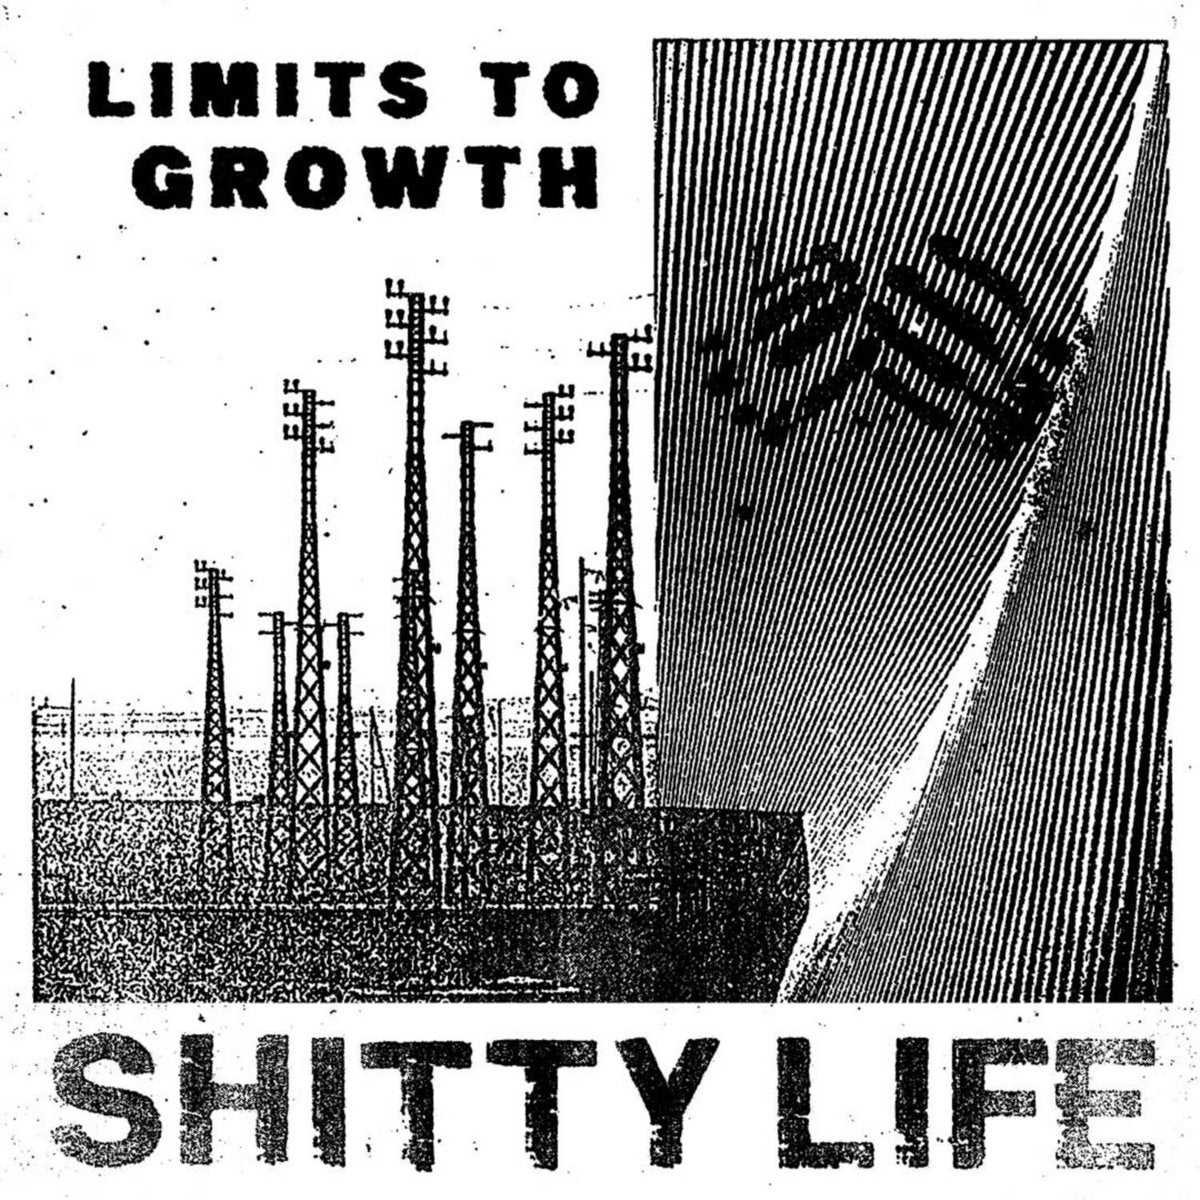 Shitty Life - Limits To Growth 7" - Vinyl - 11pm